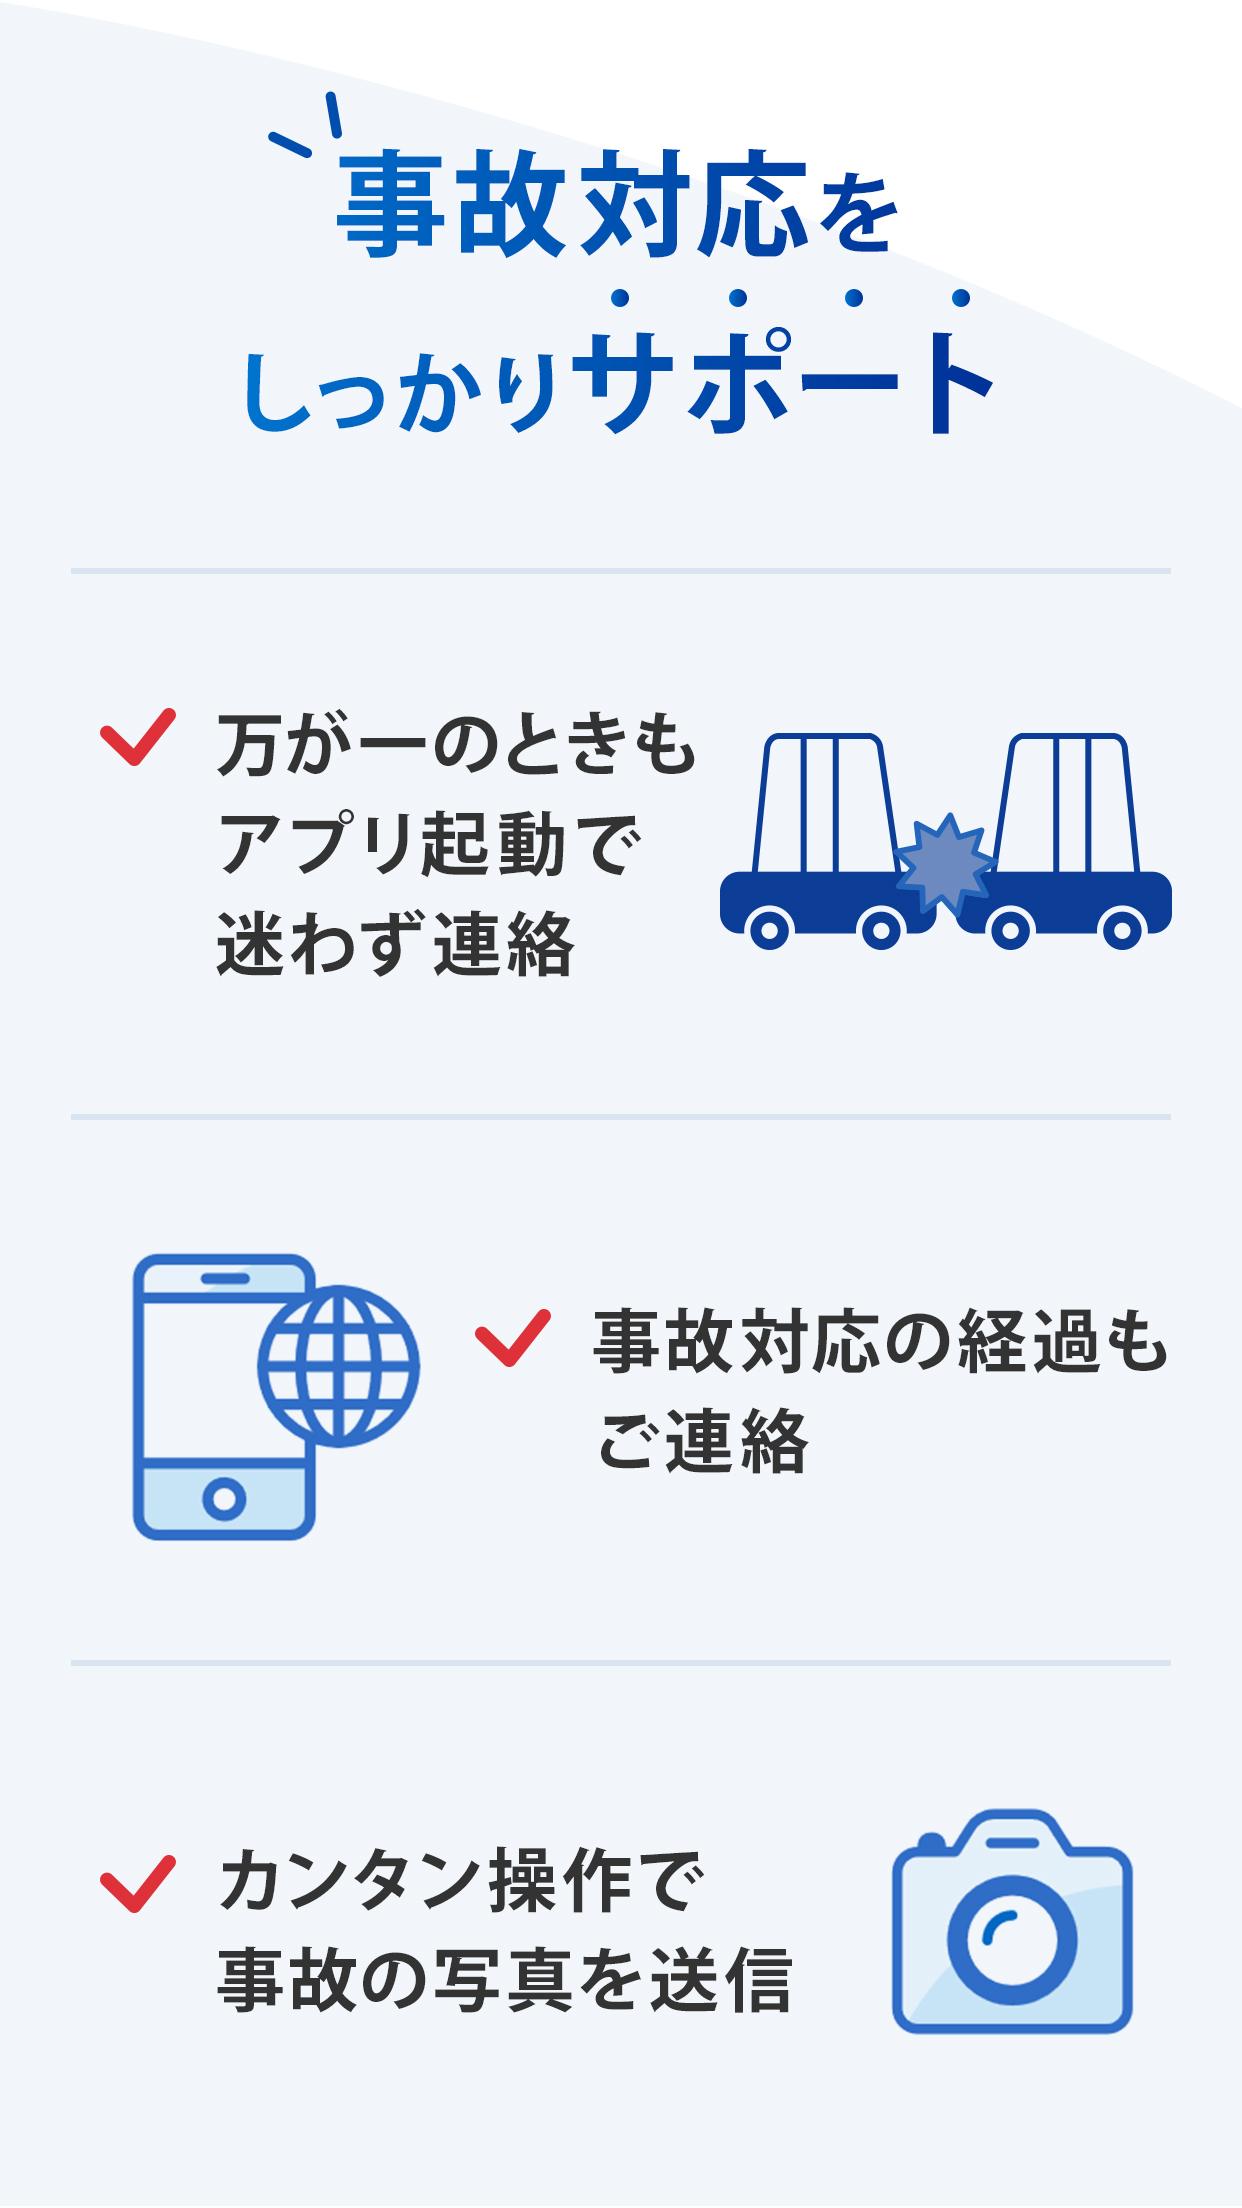 Android application 東京海上日動マイページ(旧モバイルエージェント) screenshort